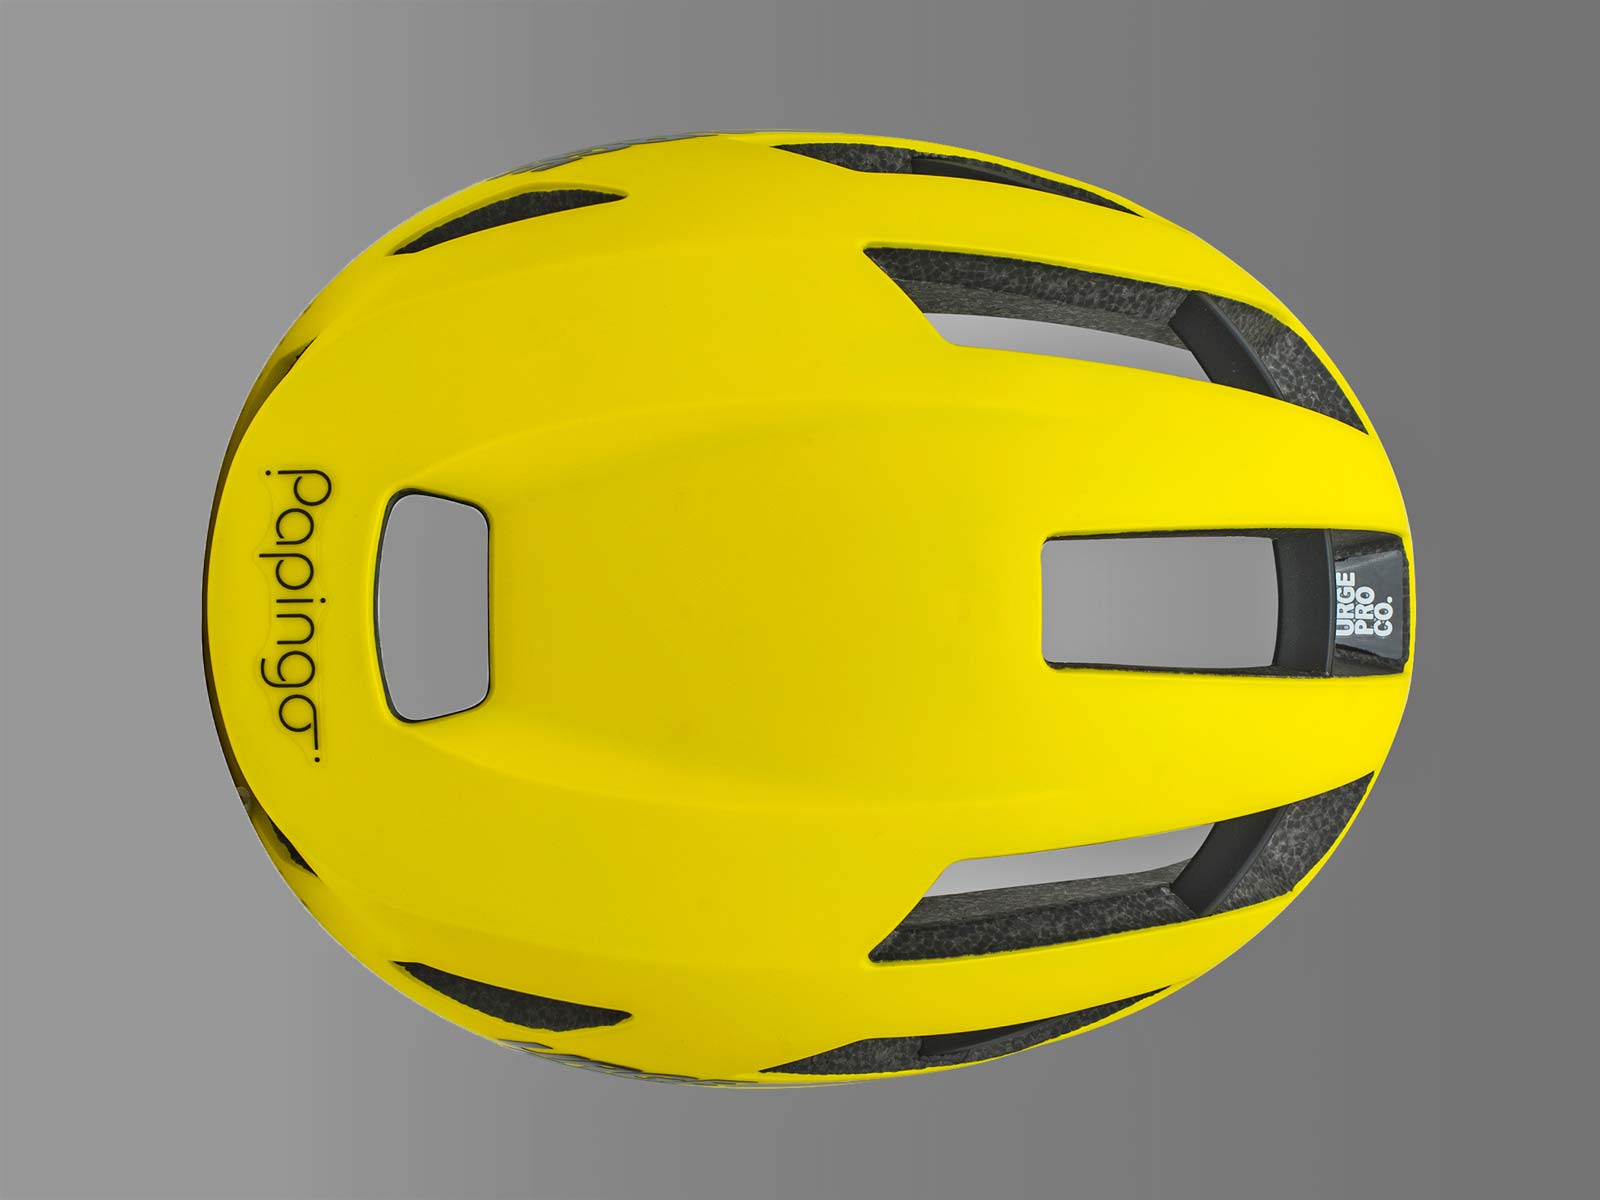 Urge Papingo road bike helmet, lightweight affordable eco-friendly vented aero road helmet